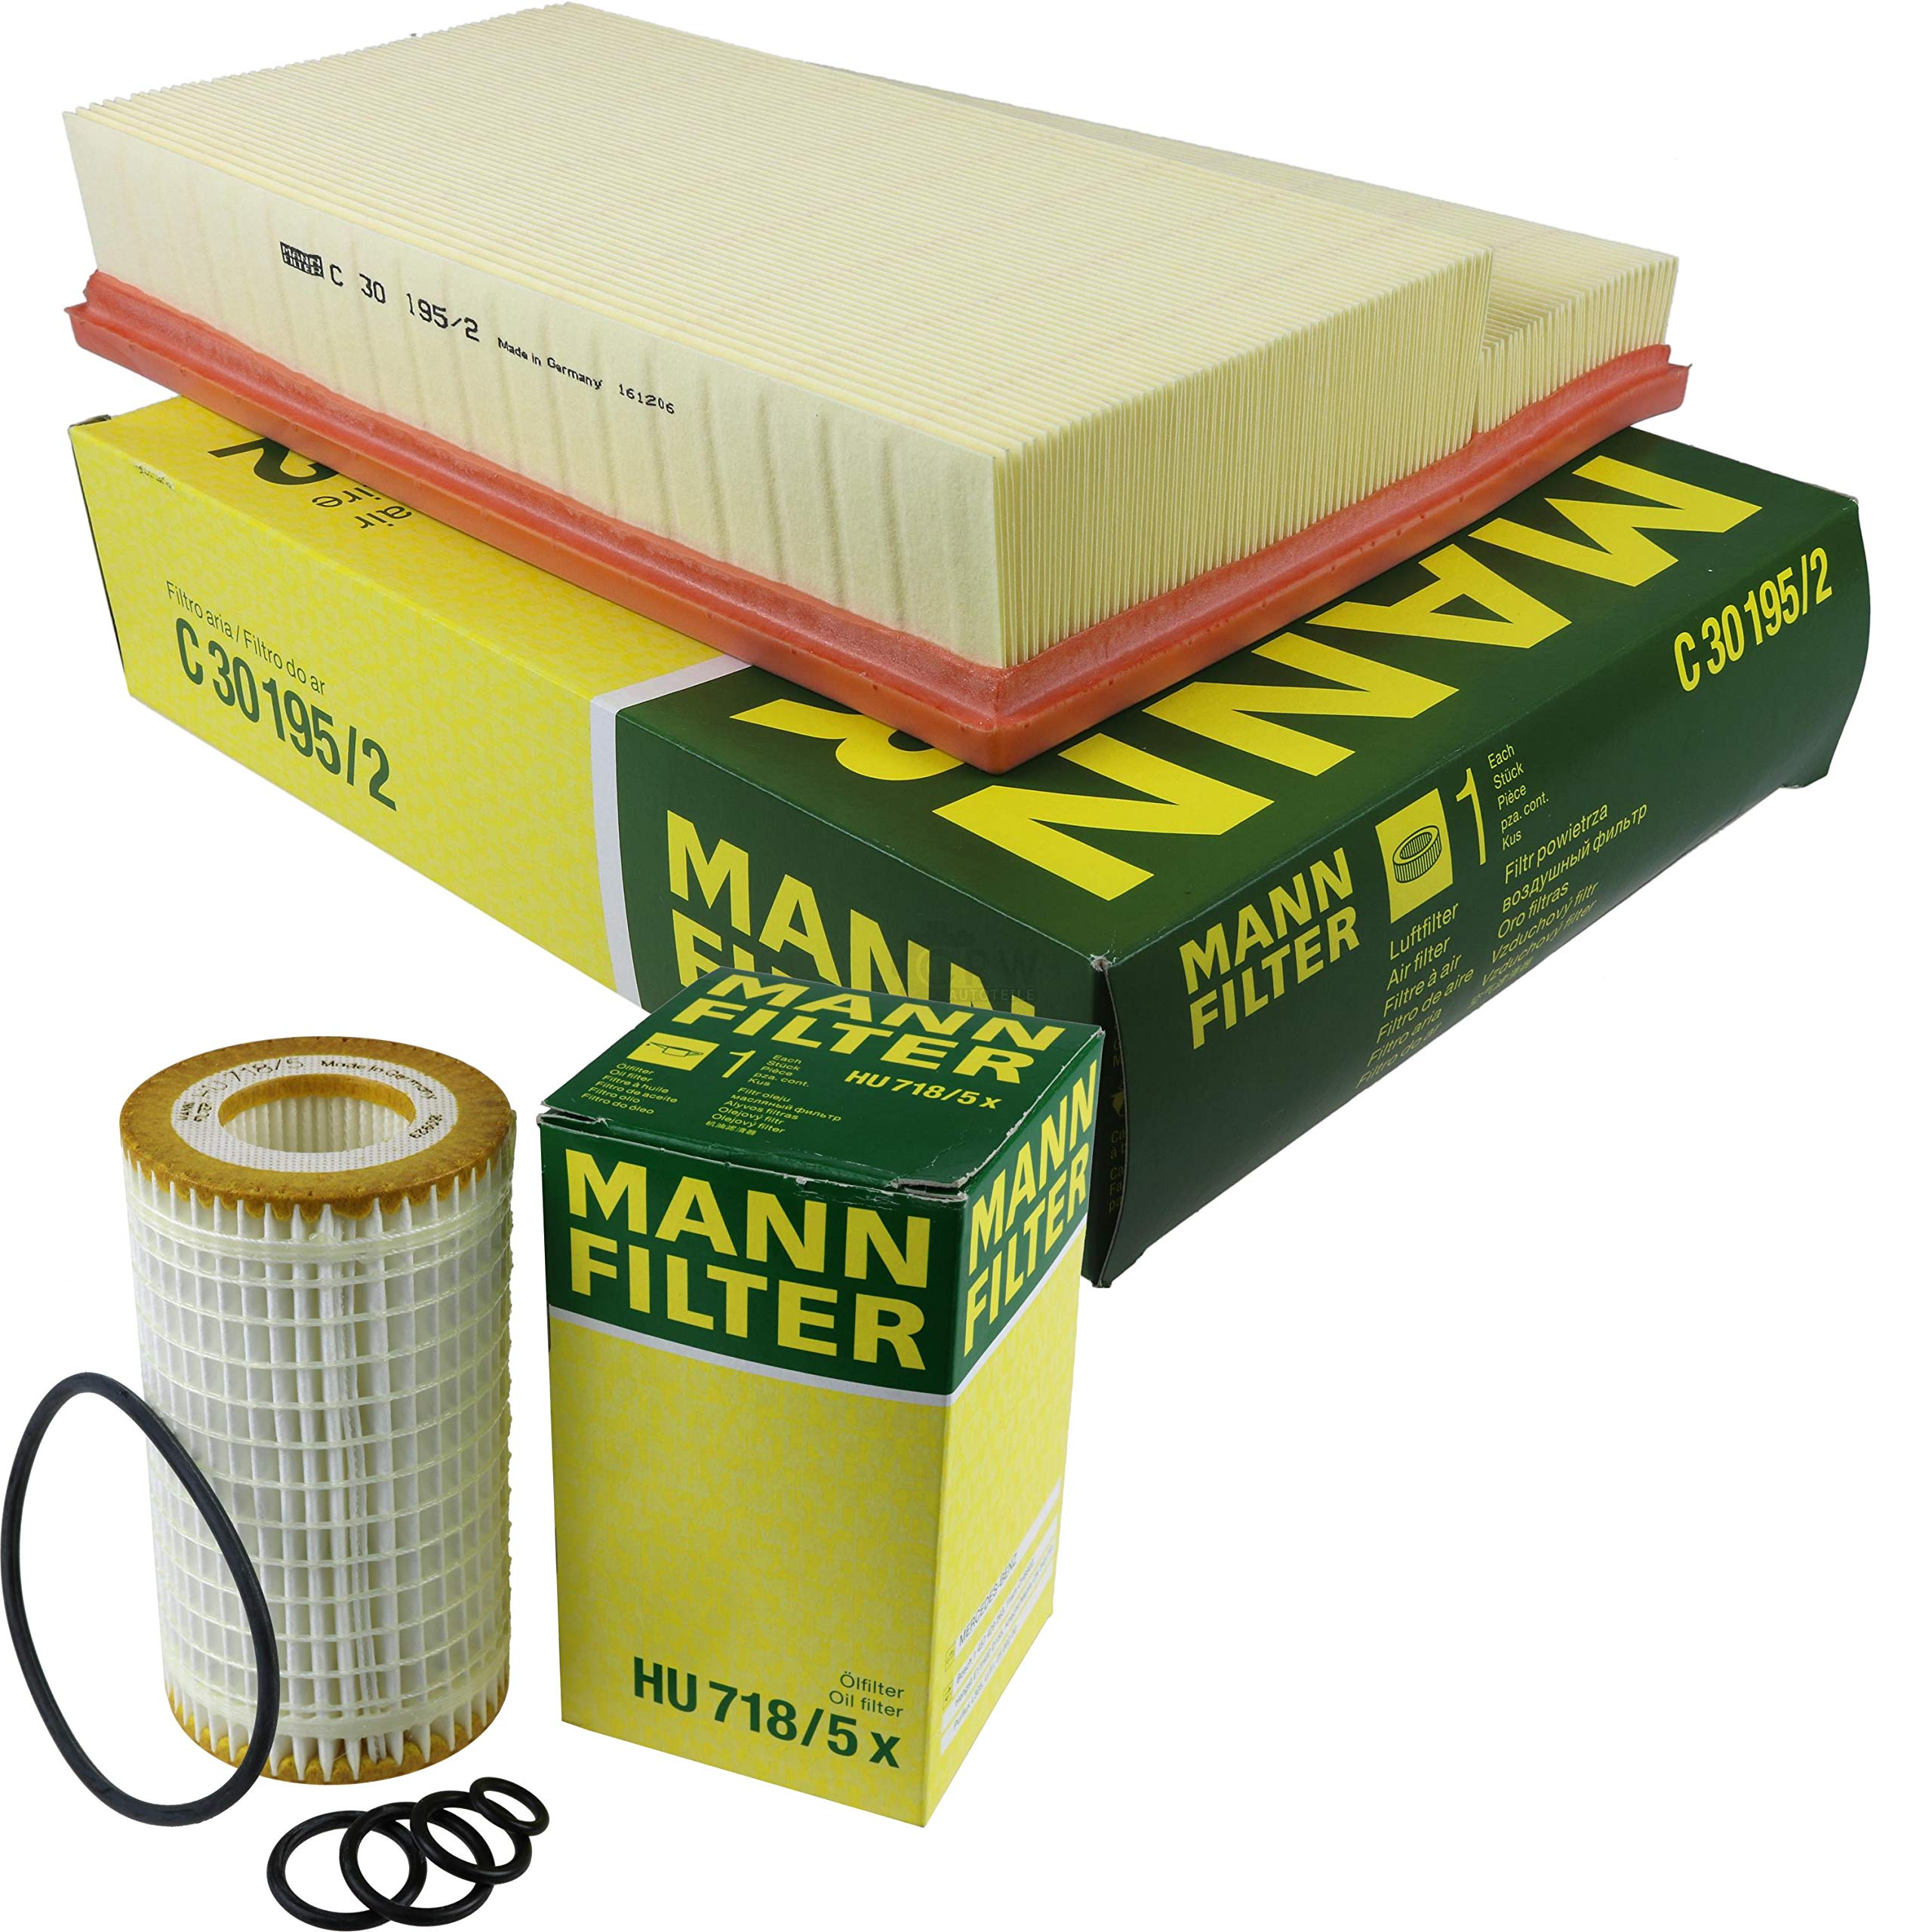 MANN-FILTER Inspektions Set Inspektionspaket Luftfilter Ölfilter